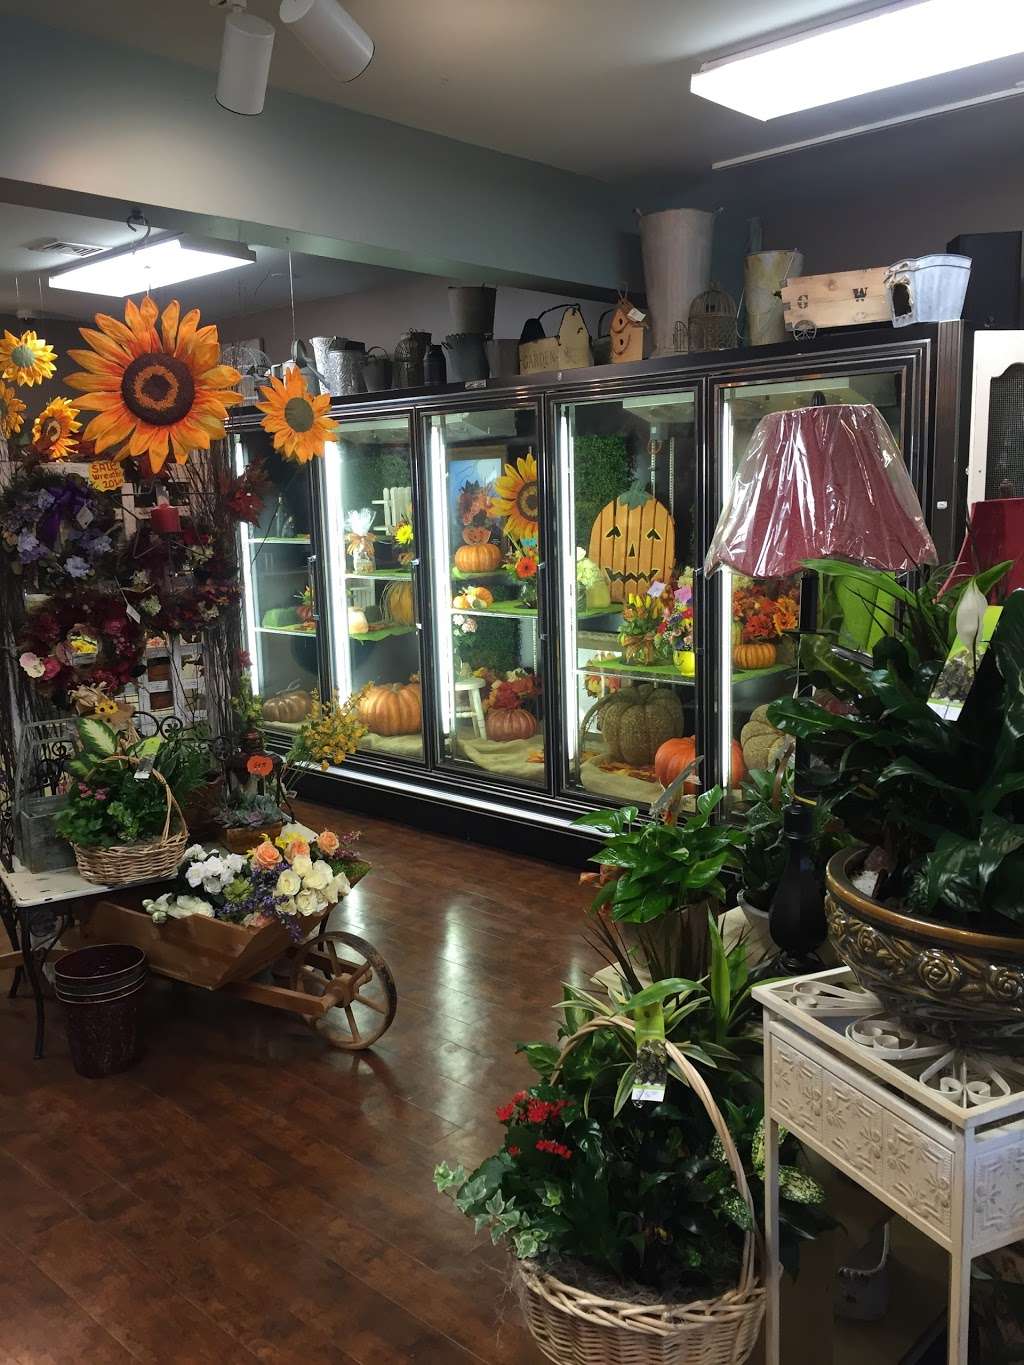 Boslands Flower Shop | 1600 Ratzer Rd, Wayne, NJ 07470, USA | Phone: (973) 453-0033